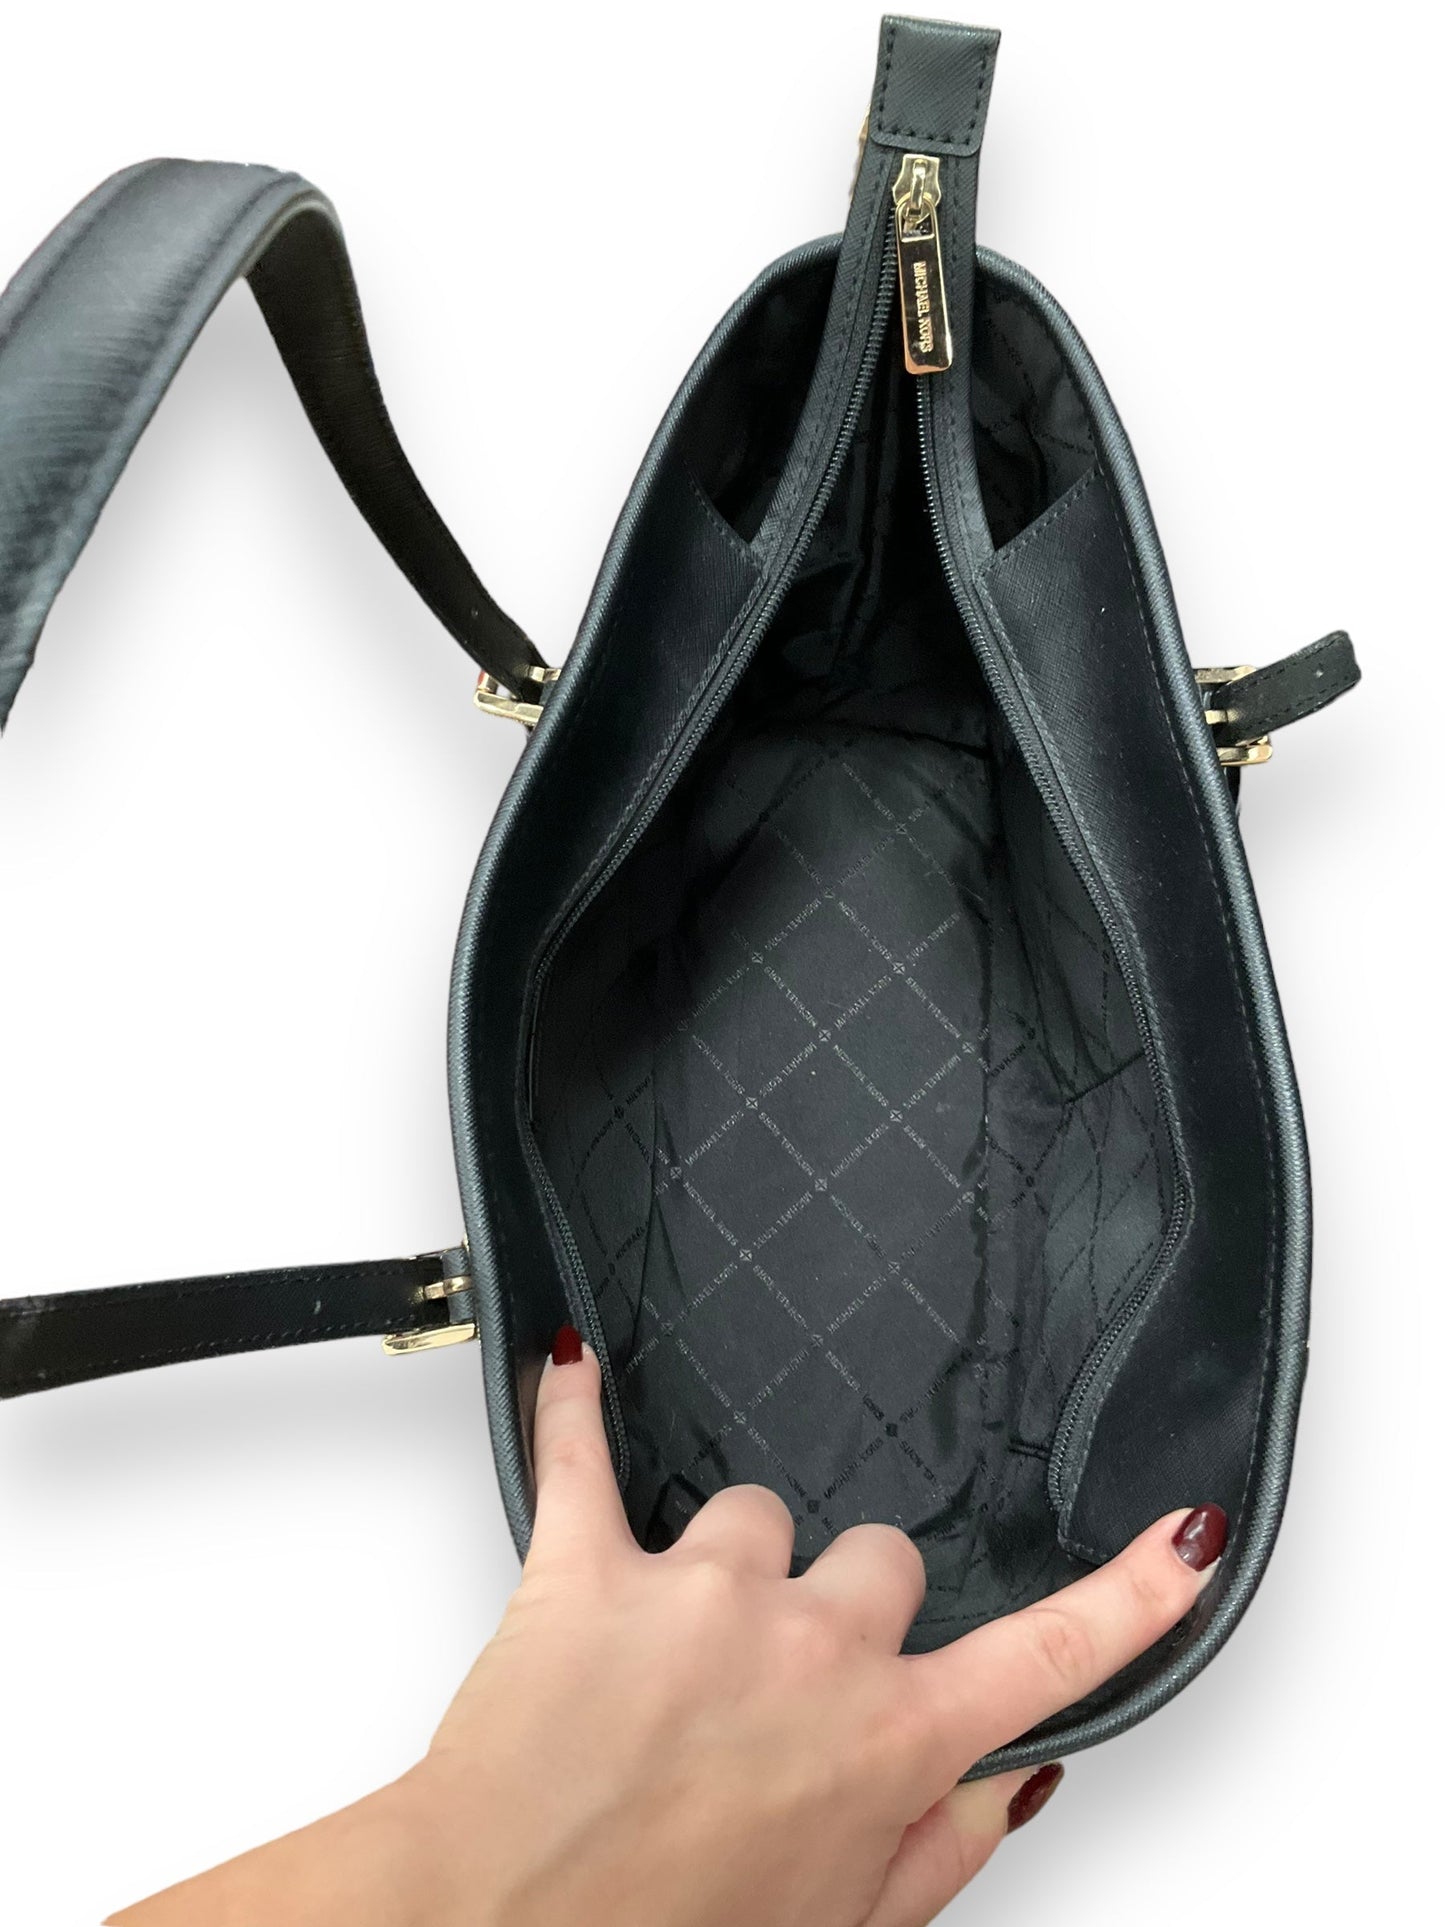 Brown & Yellow Handbag Designer Michael Kors, Size Medium